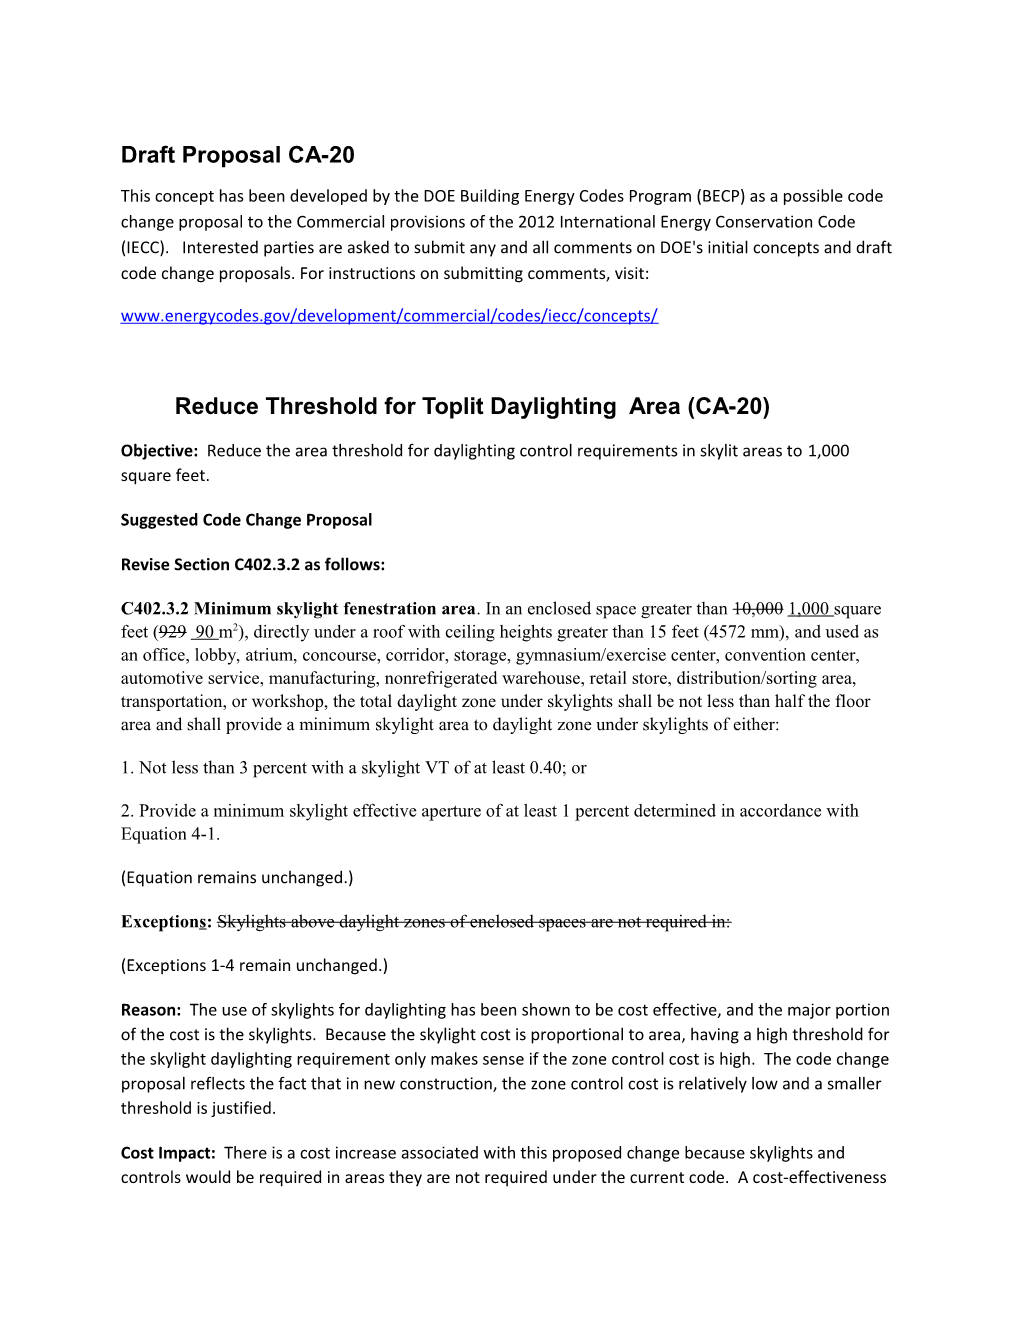 Reduce Threshold for Toplit Daylighting Area (CA-20)